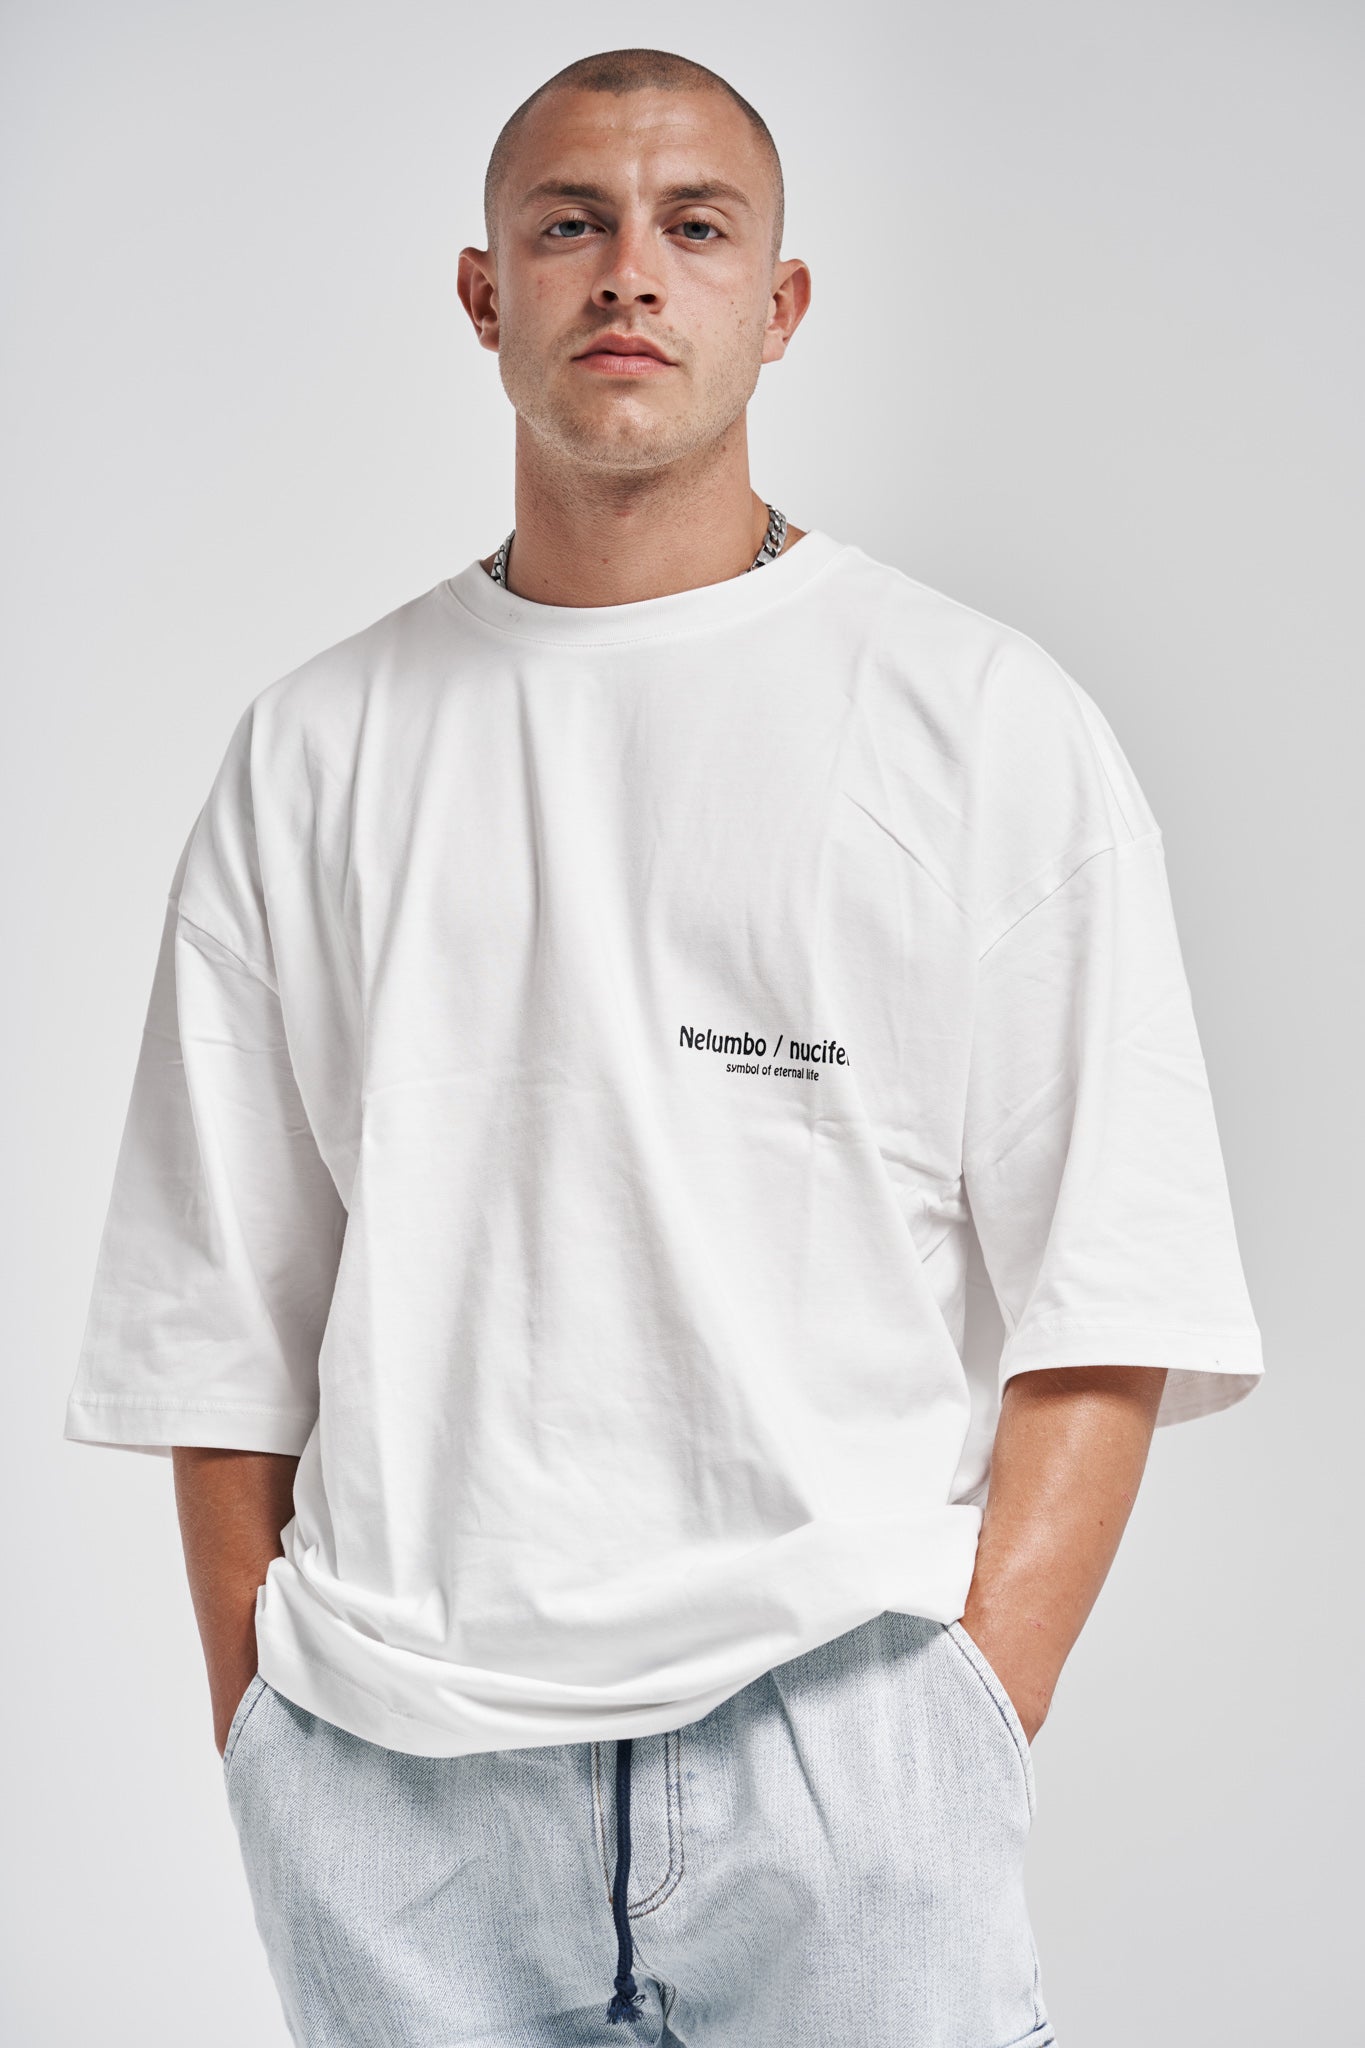 Infinity Nucifera Oversized Tee White - UNEFFECTED STUDIOS® - Shirts & Tops - UNEFFECTED STUDIOS®